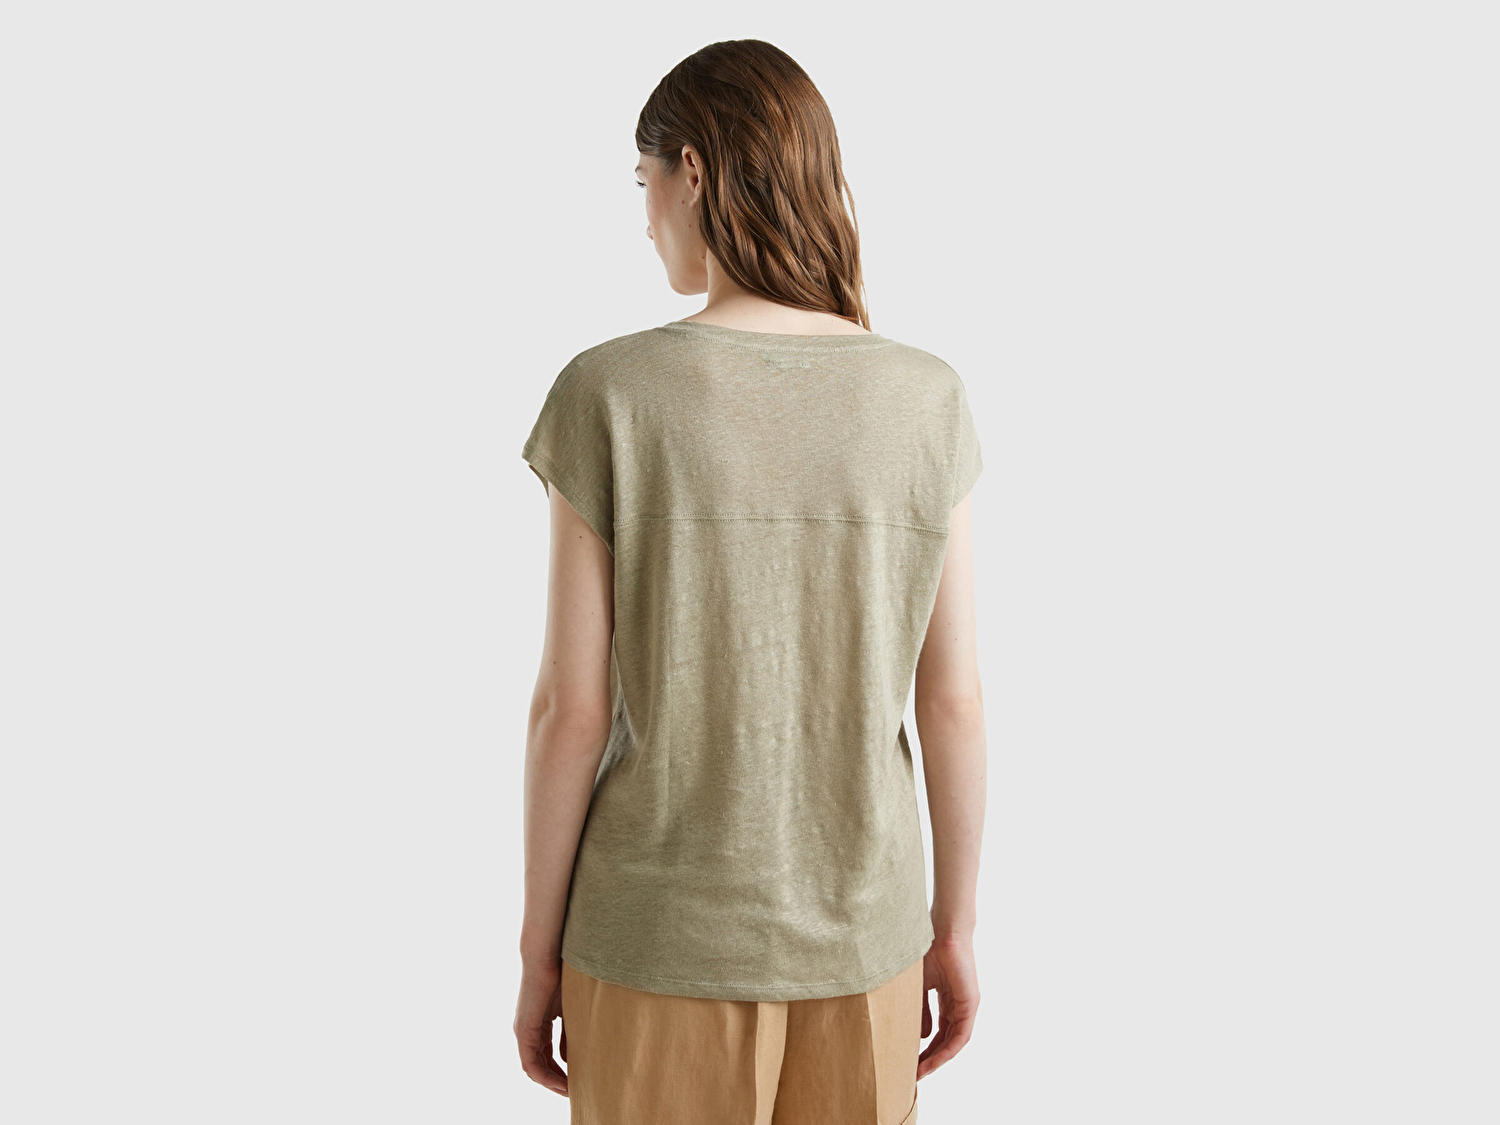 Benetton Kadın Haki %100 Keten Rahat Kalıp Derin V Yaka Kolsuz T-Shirt